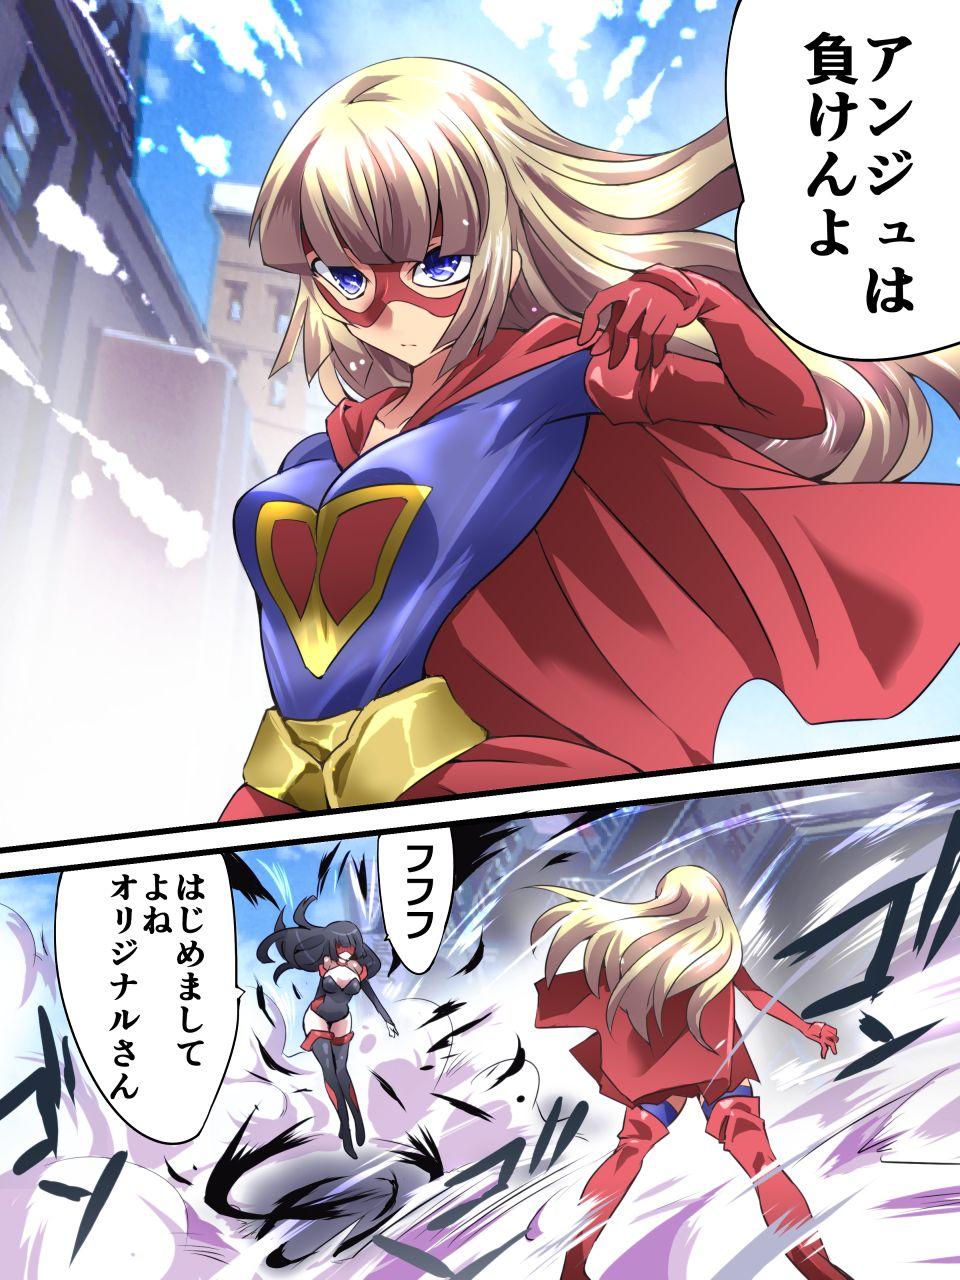 Cunt [Atelier Hachifukuan] Superheroine Yuukai Ryoujoku 12 - Superheroine in Distress - Etoile Nol Free Fuck - Page 3